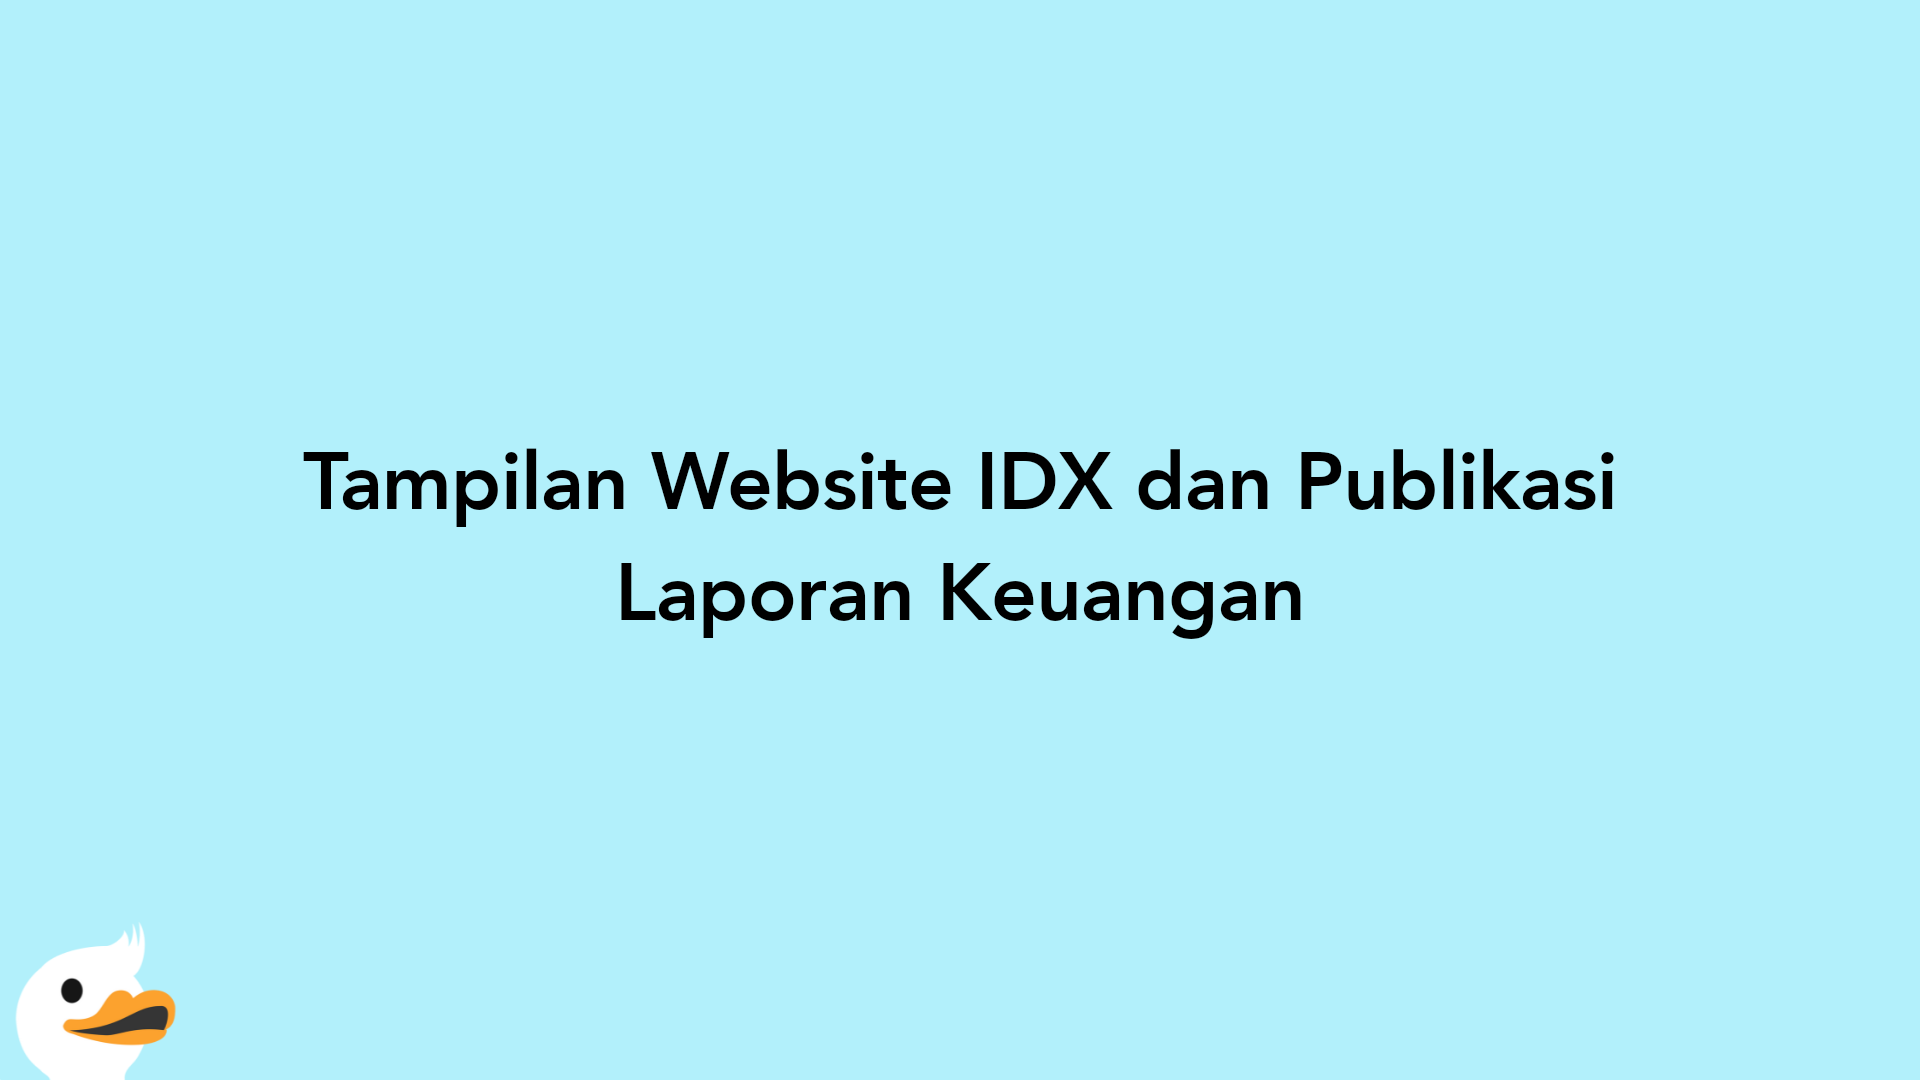 Tampilan Website IDX dan Publikasi Laporan Keuangan